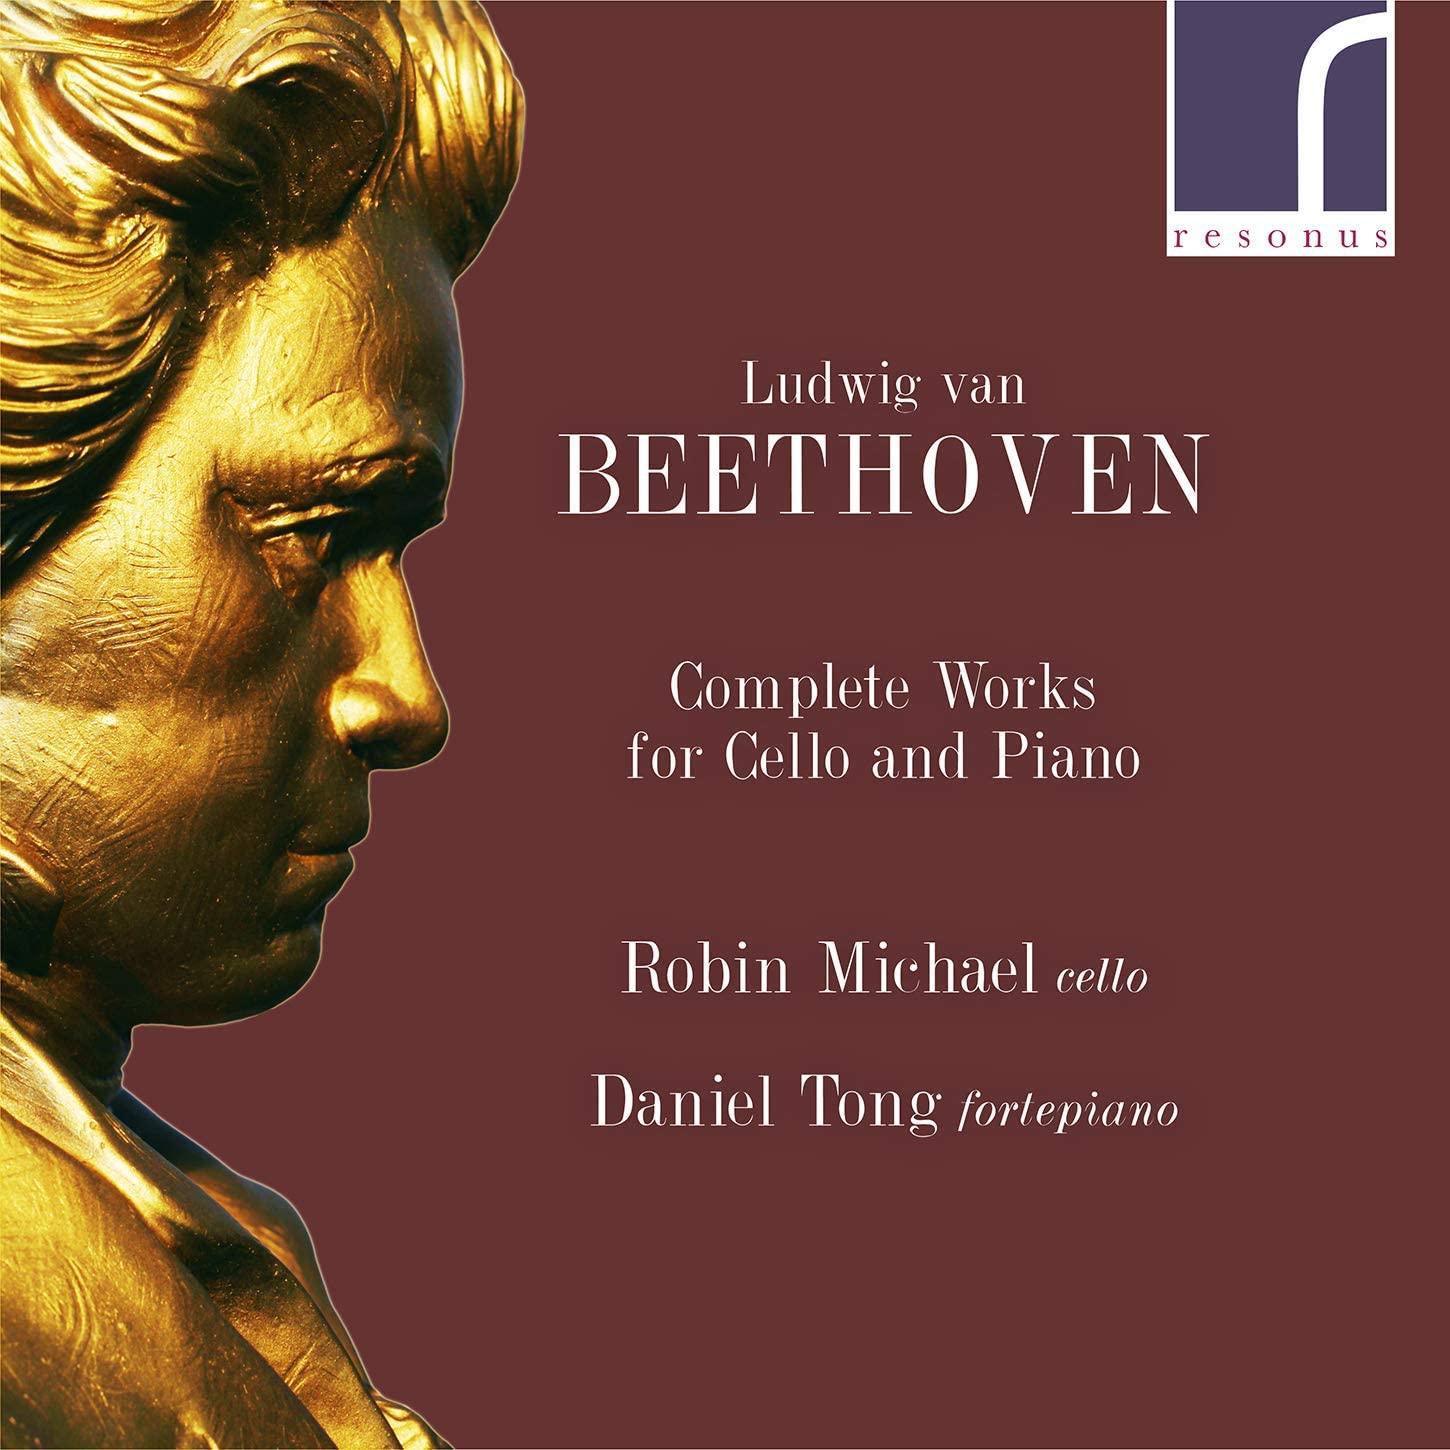 Cover of resonus Beethoven cello music CD